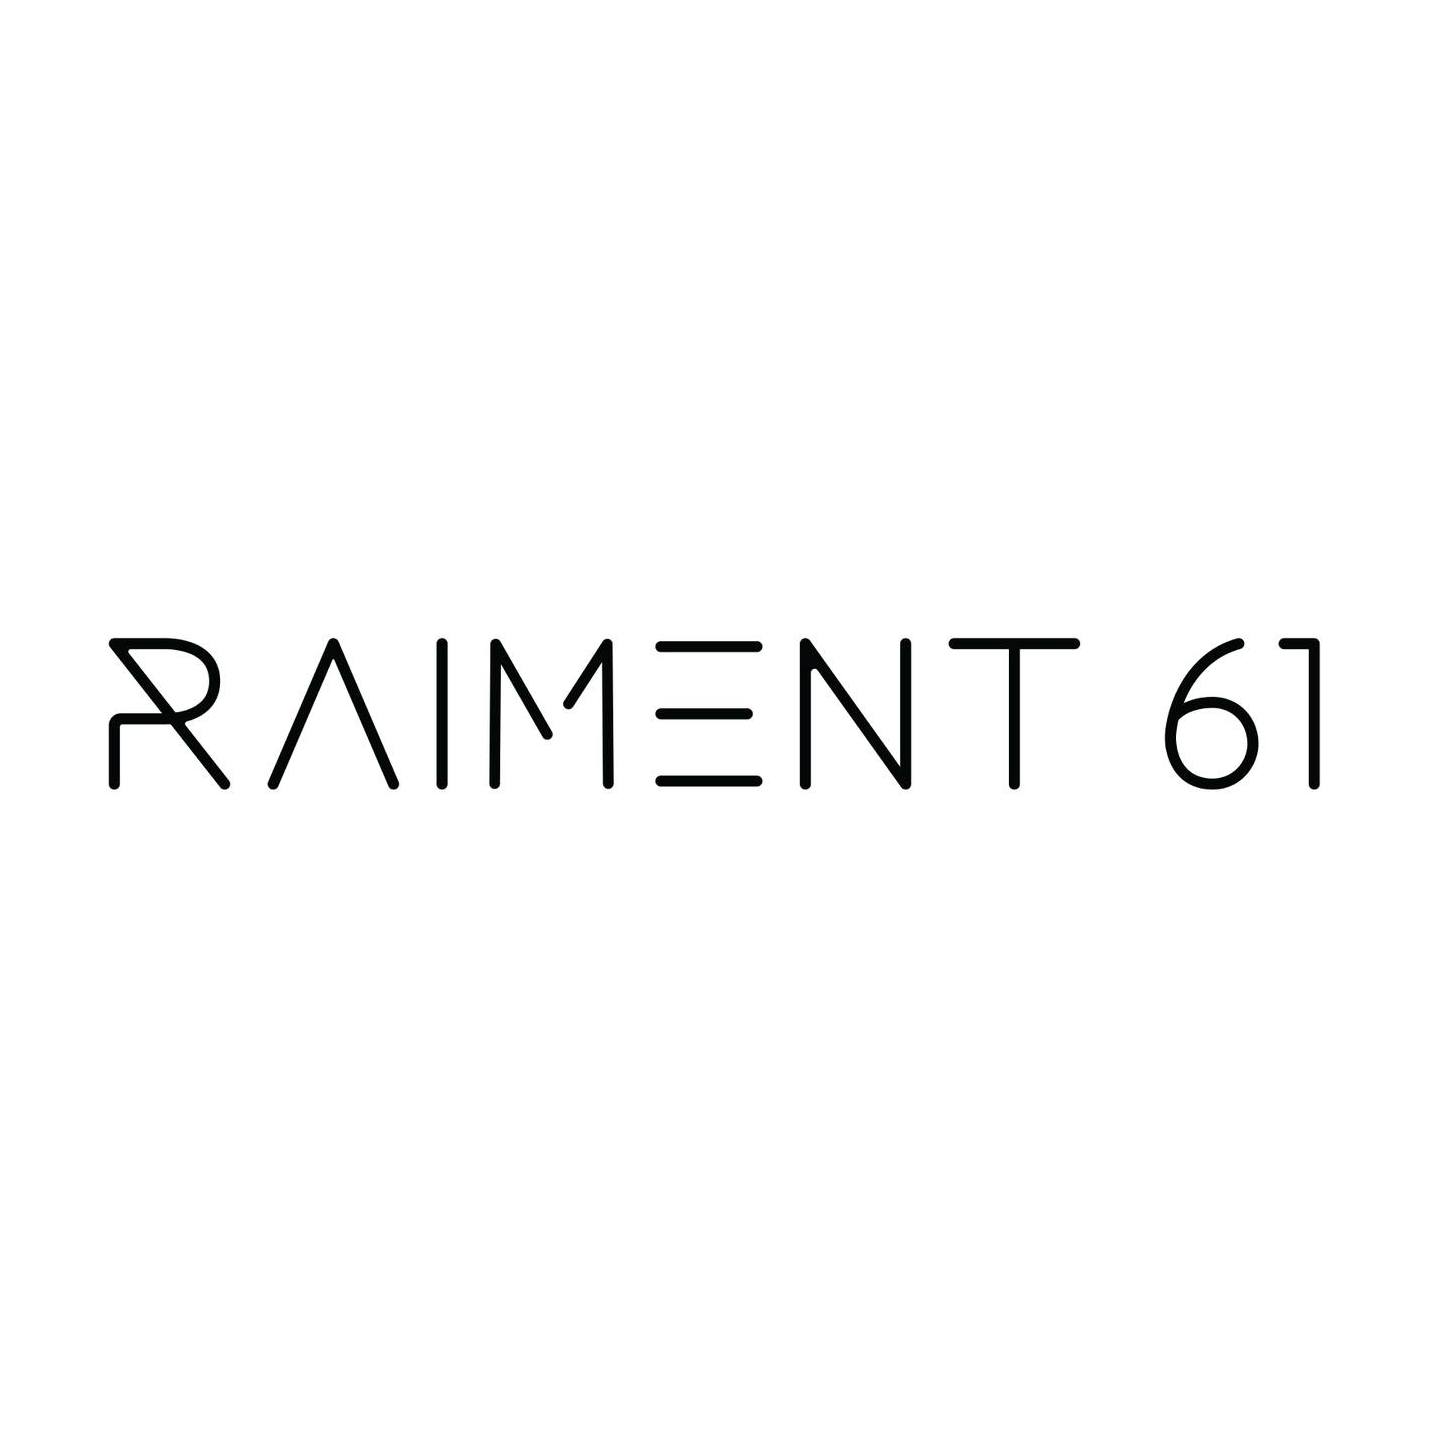 Raiment61